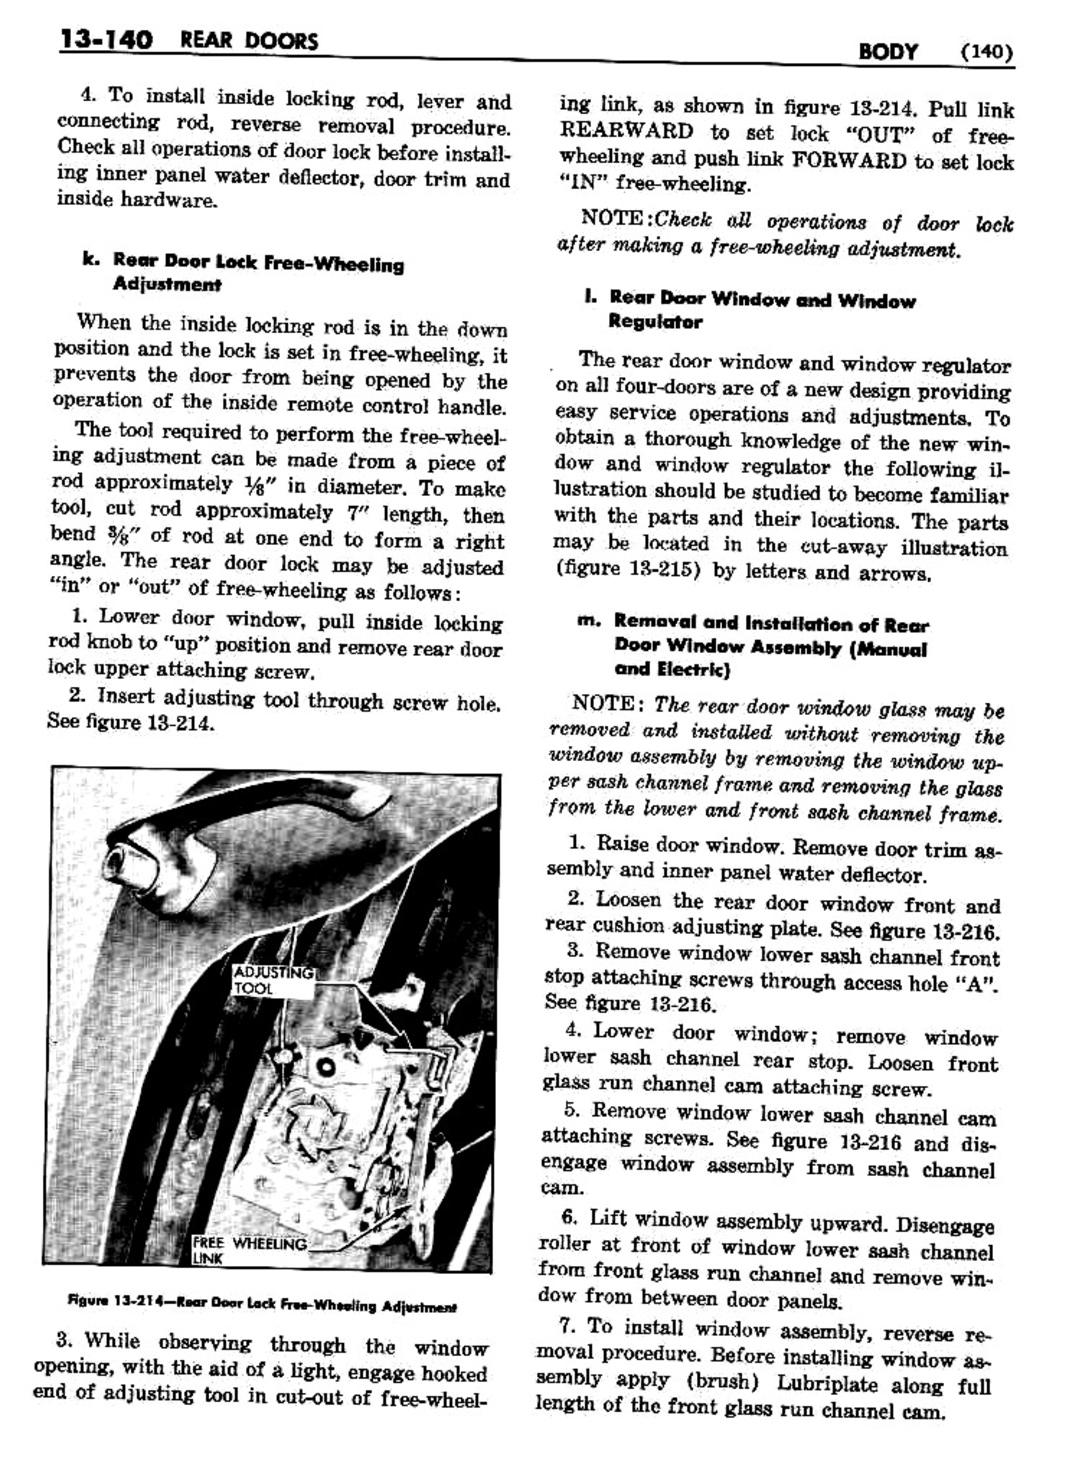 n_1957 Buick Body Service Manual-142-142.jpg